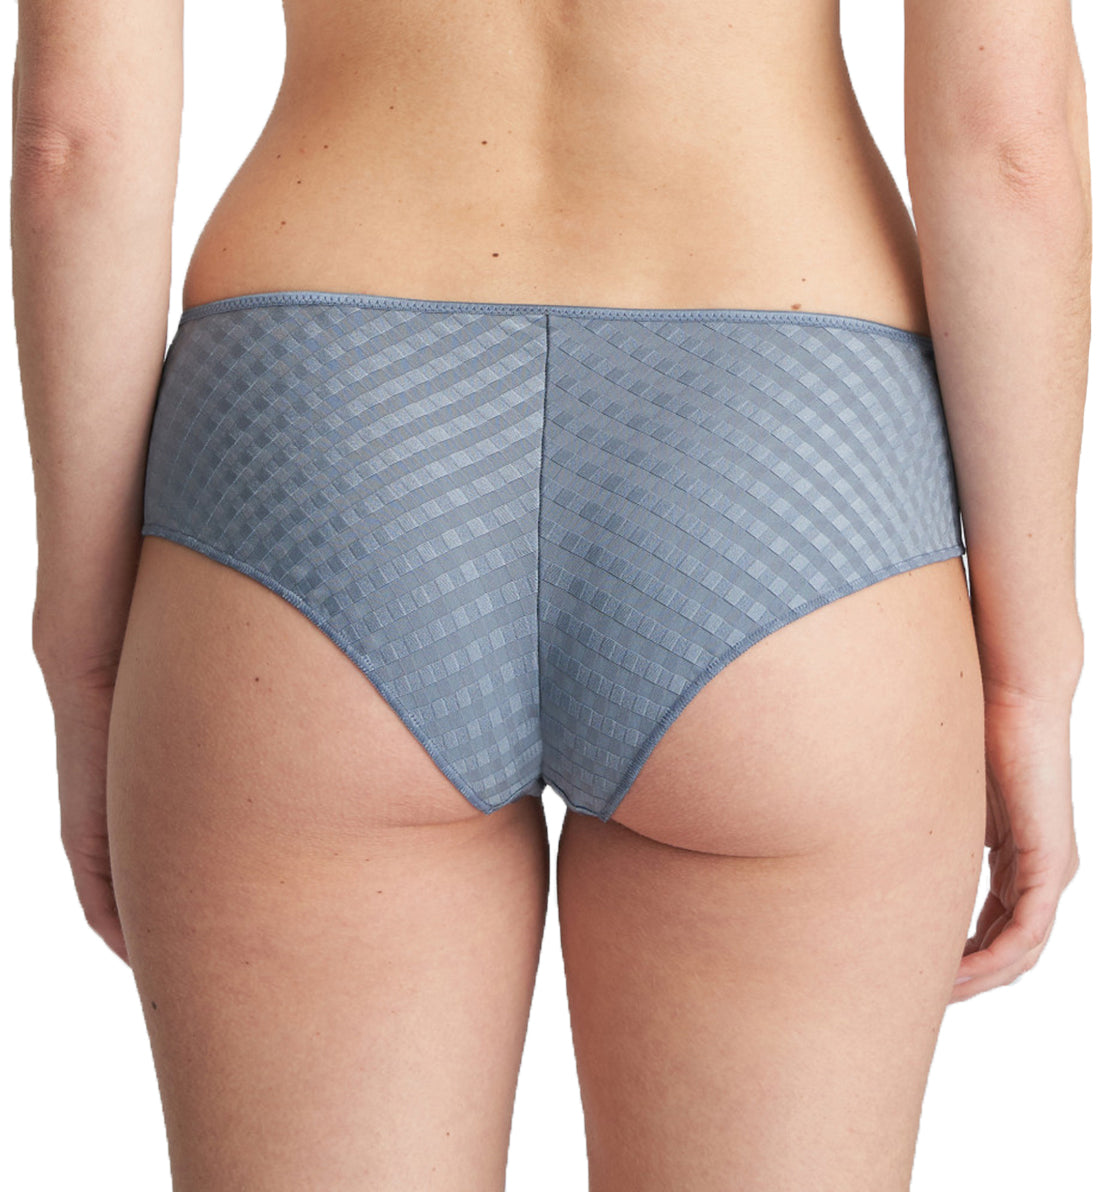 Marie Jo Avero Matching Hotpants Panty (0500415),Small,Atlantic Blue - Atlantic Blue,Small